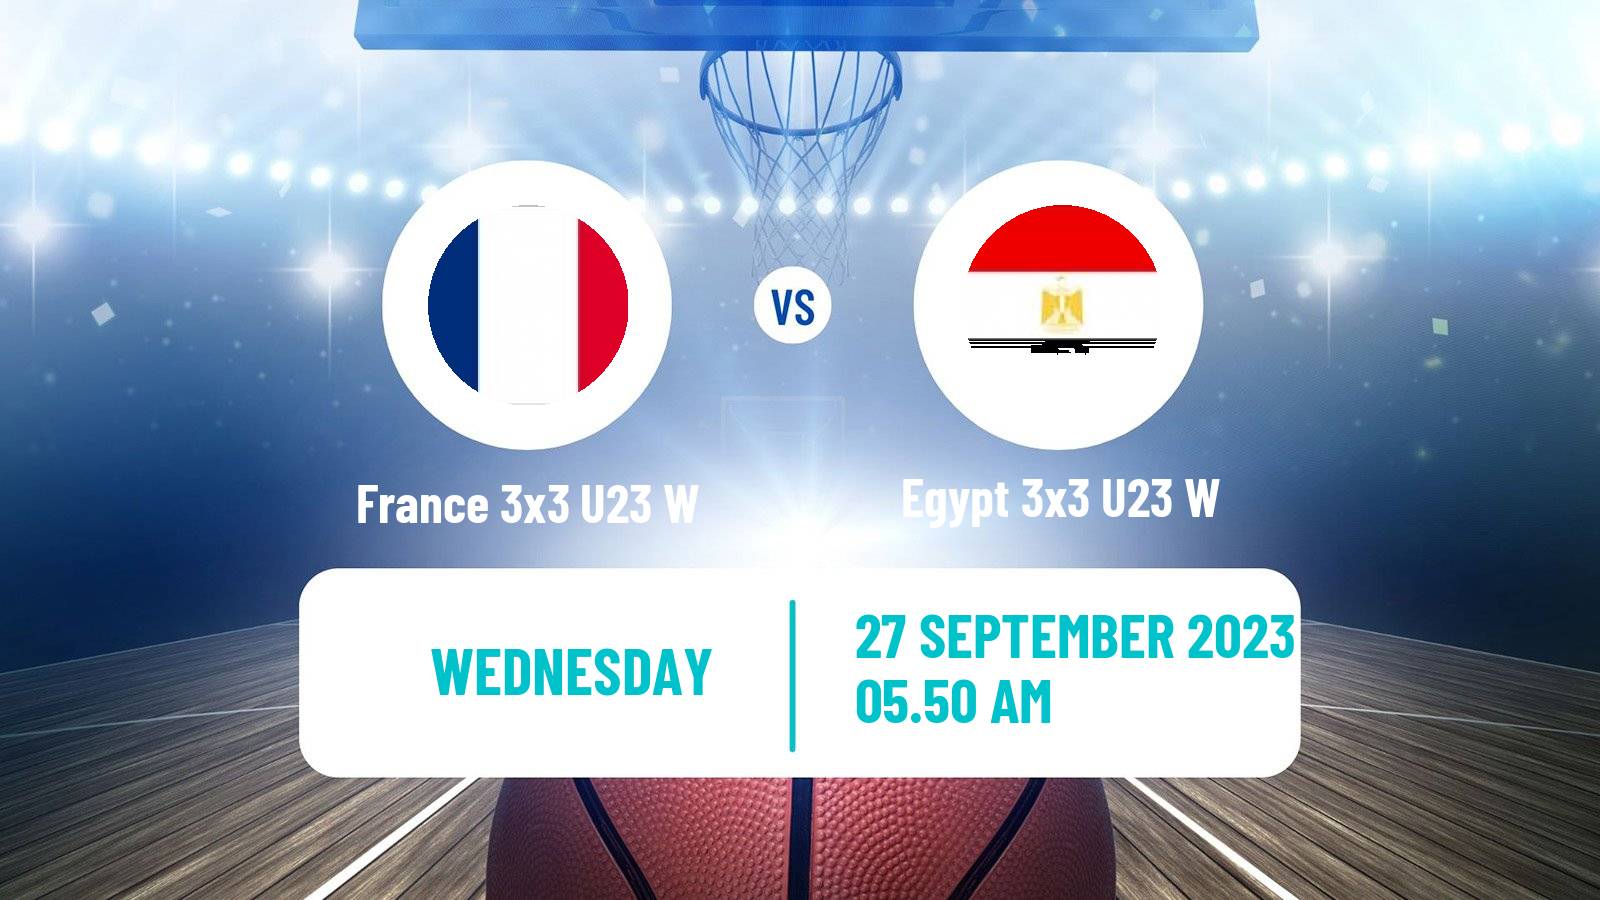 Basketball World Cup Basketball 3x3 U23 Women France 3x3 U23 W - Egypt 3x3 U23 W